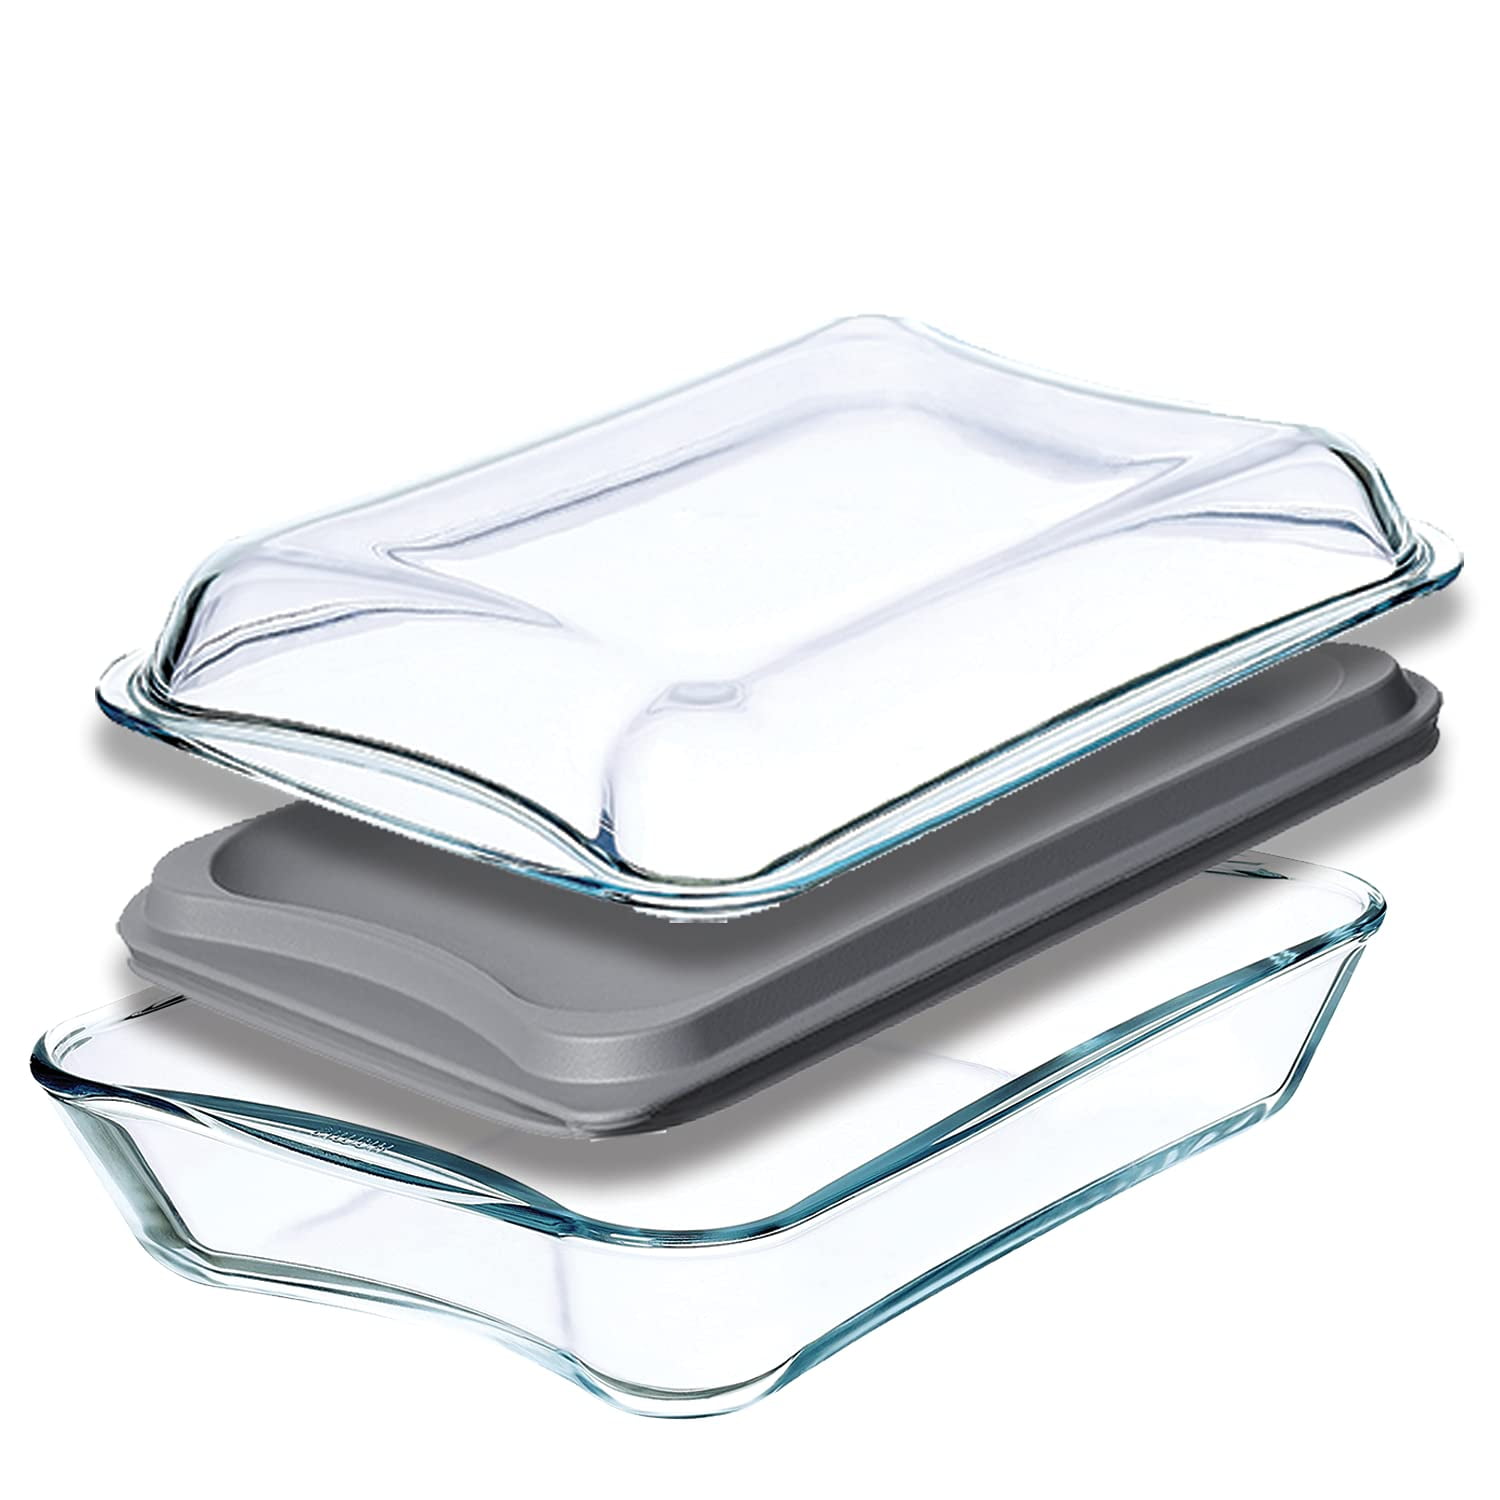 Simax Glassware Clear Glass Pitcher | for Cold Beverages, Dishwasher Safe, Angled Cylinder Design, 2.5 Quart Capacity